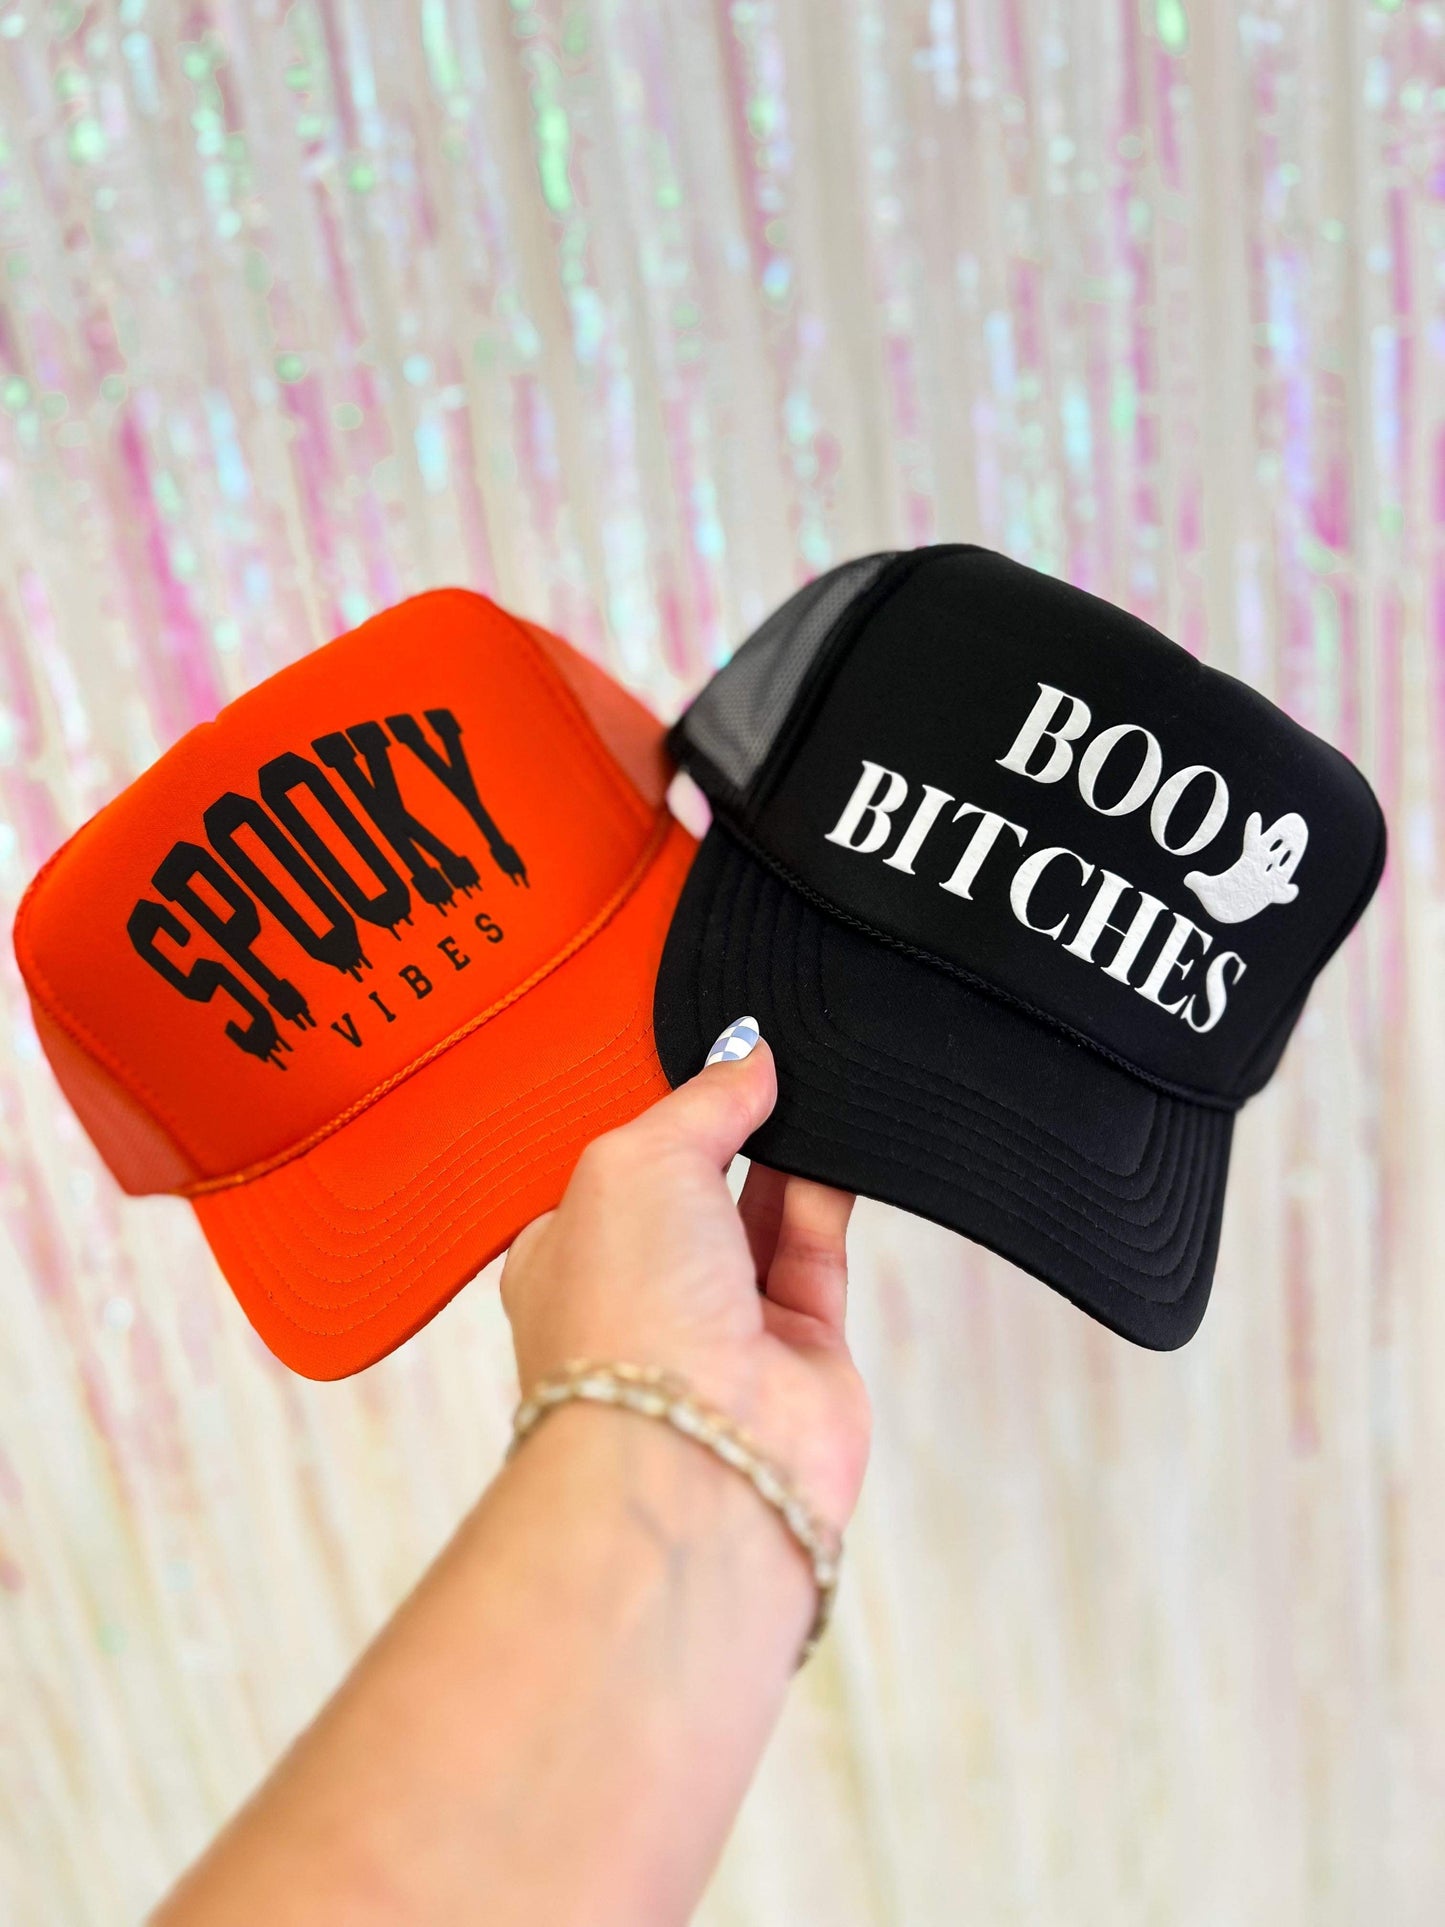 Boo Bitch Trucker Hat